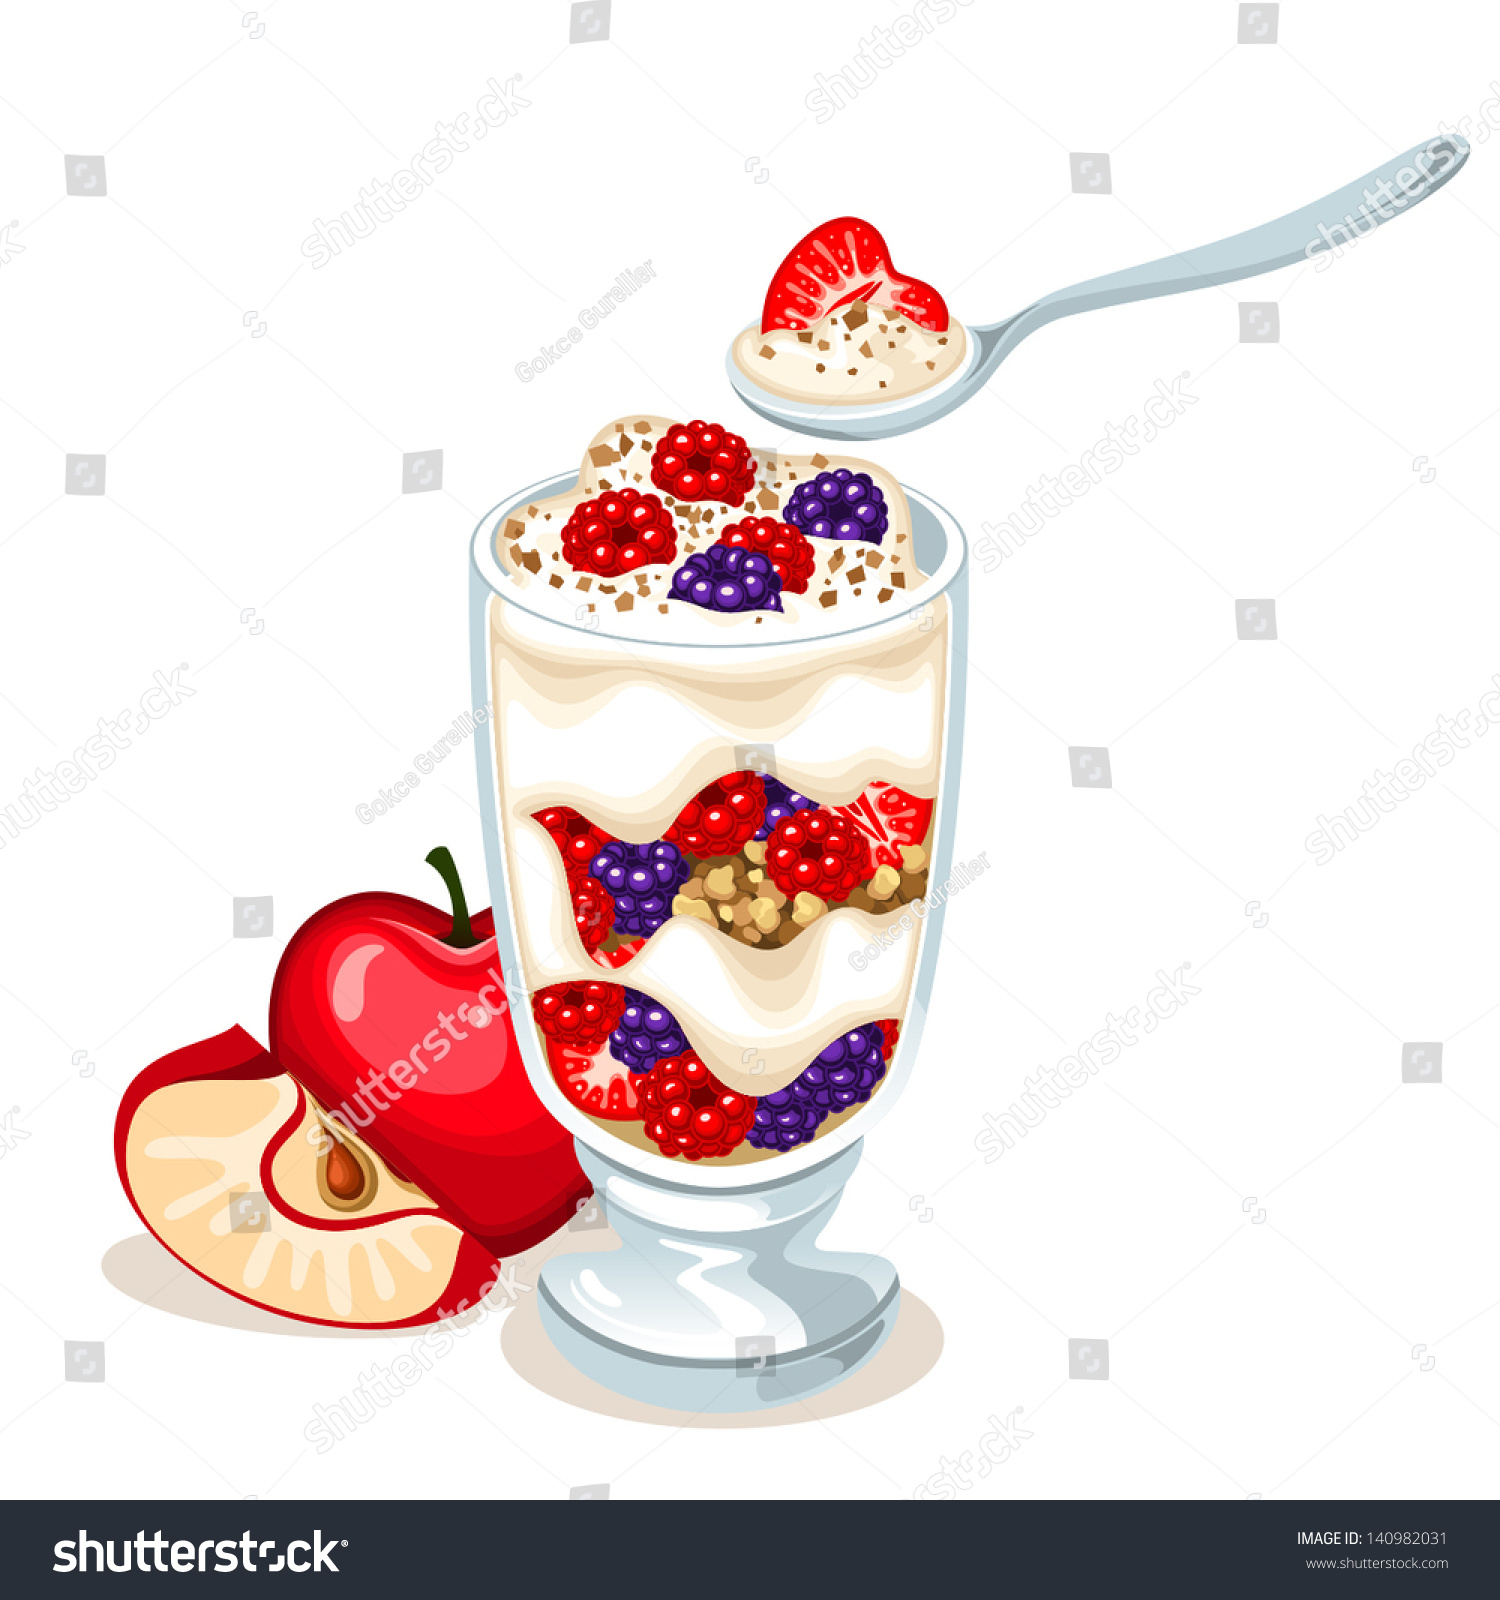 yogurt pictures clip art - photo #46